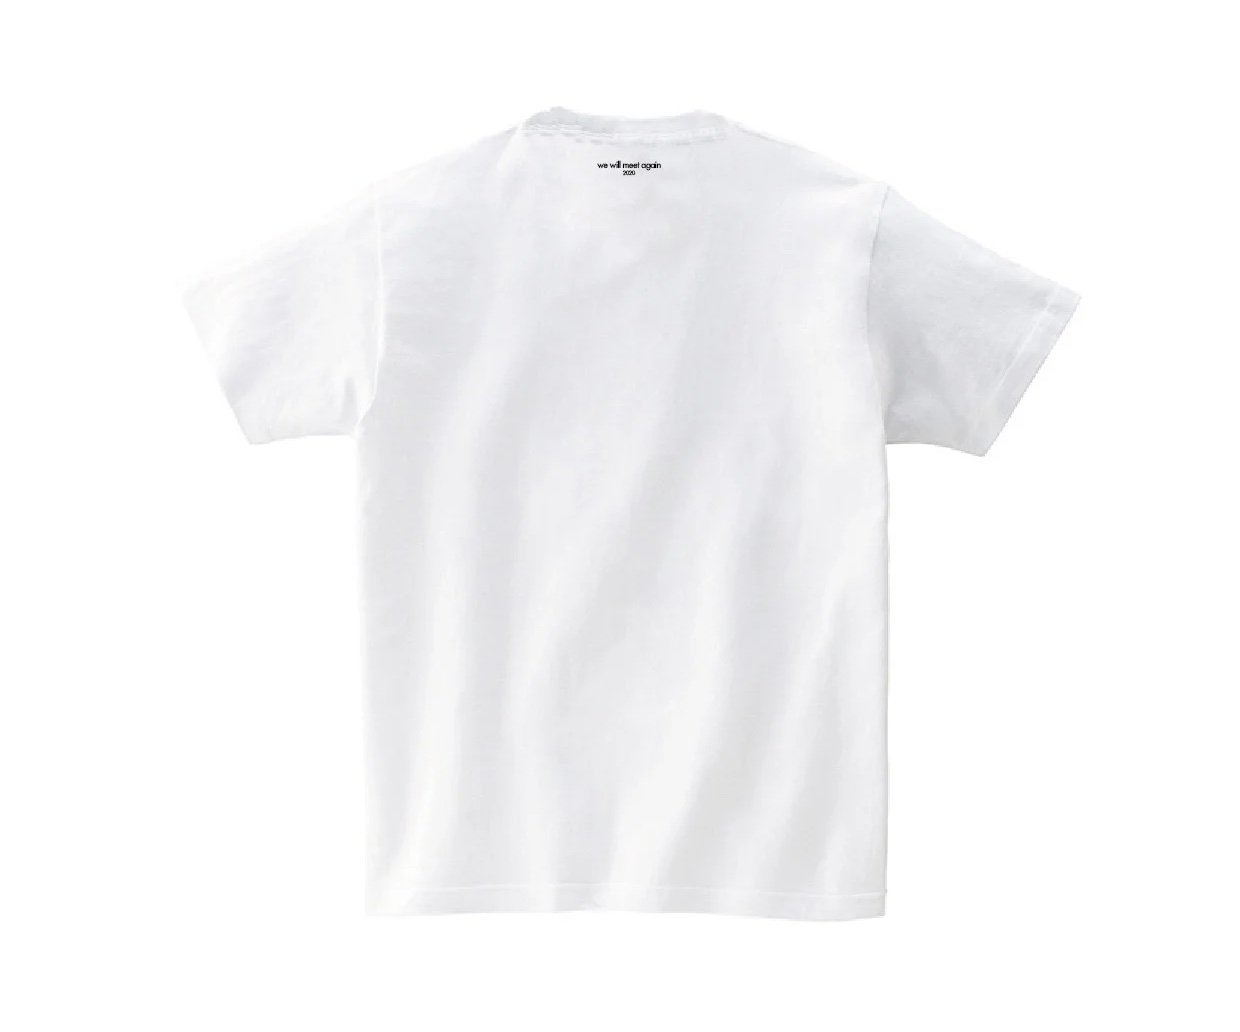 LIQUIDROOM x Seiho T-shirts - LIQUIDROOM ONLINE STORE